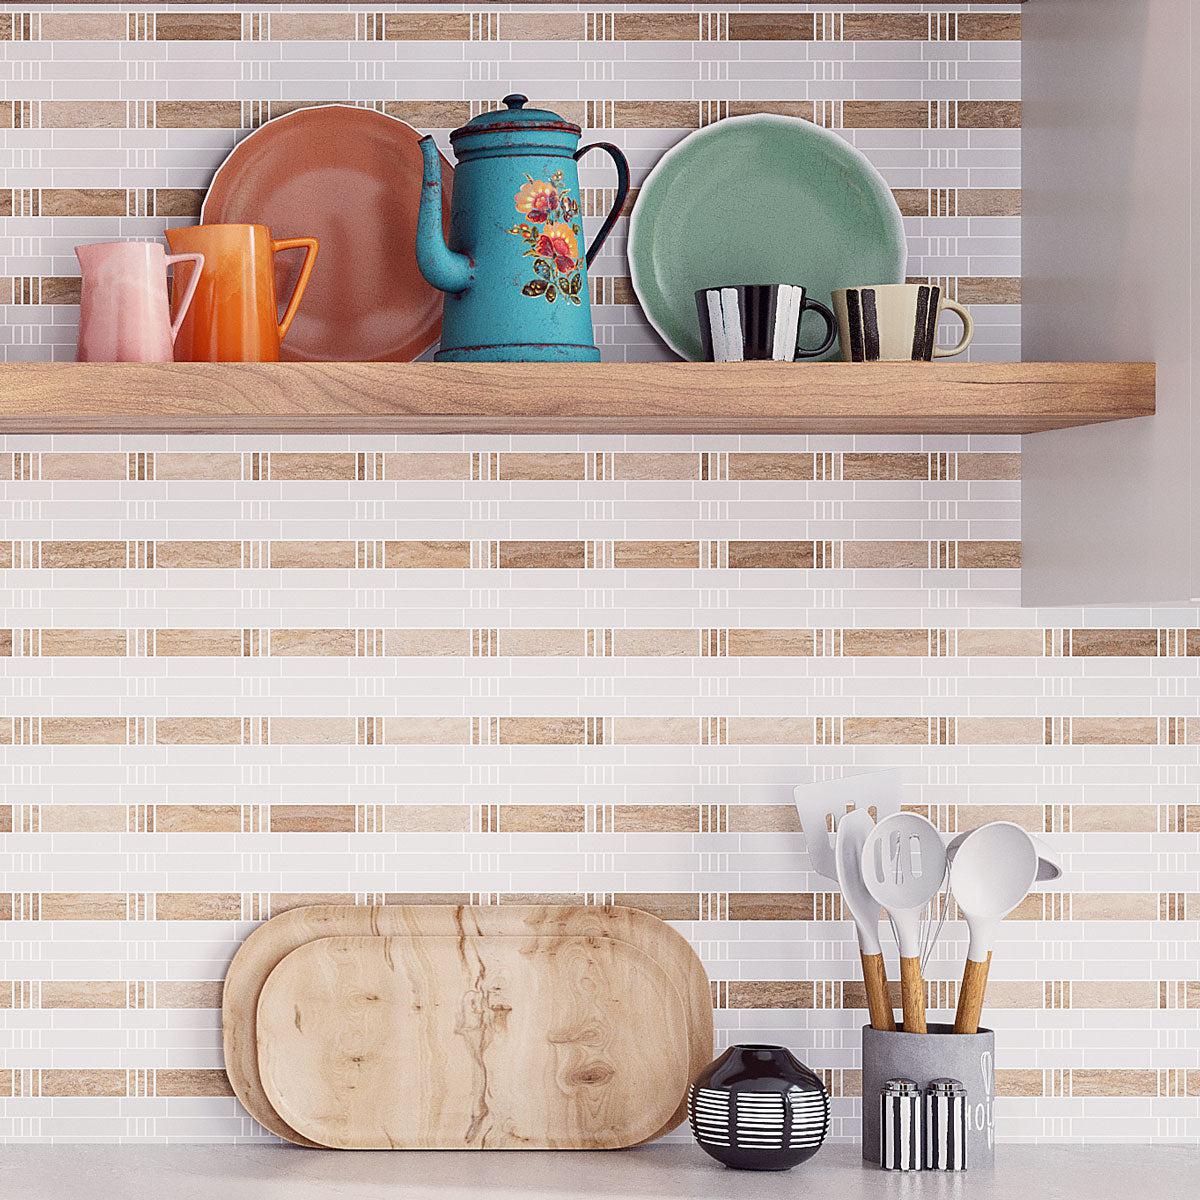 Bamboo Sticks Marble Mosaic Tile backsplash for a colorful eclectic kitchen backsplash